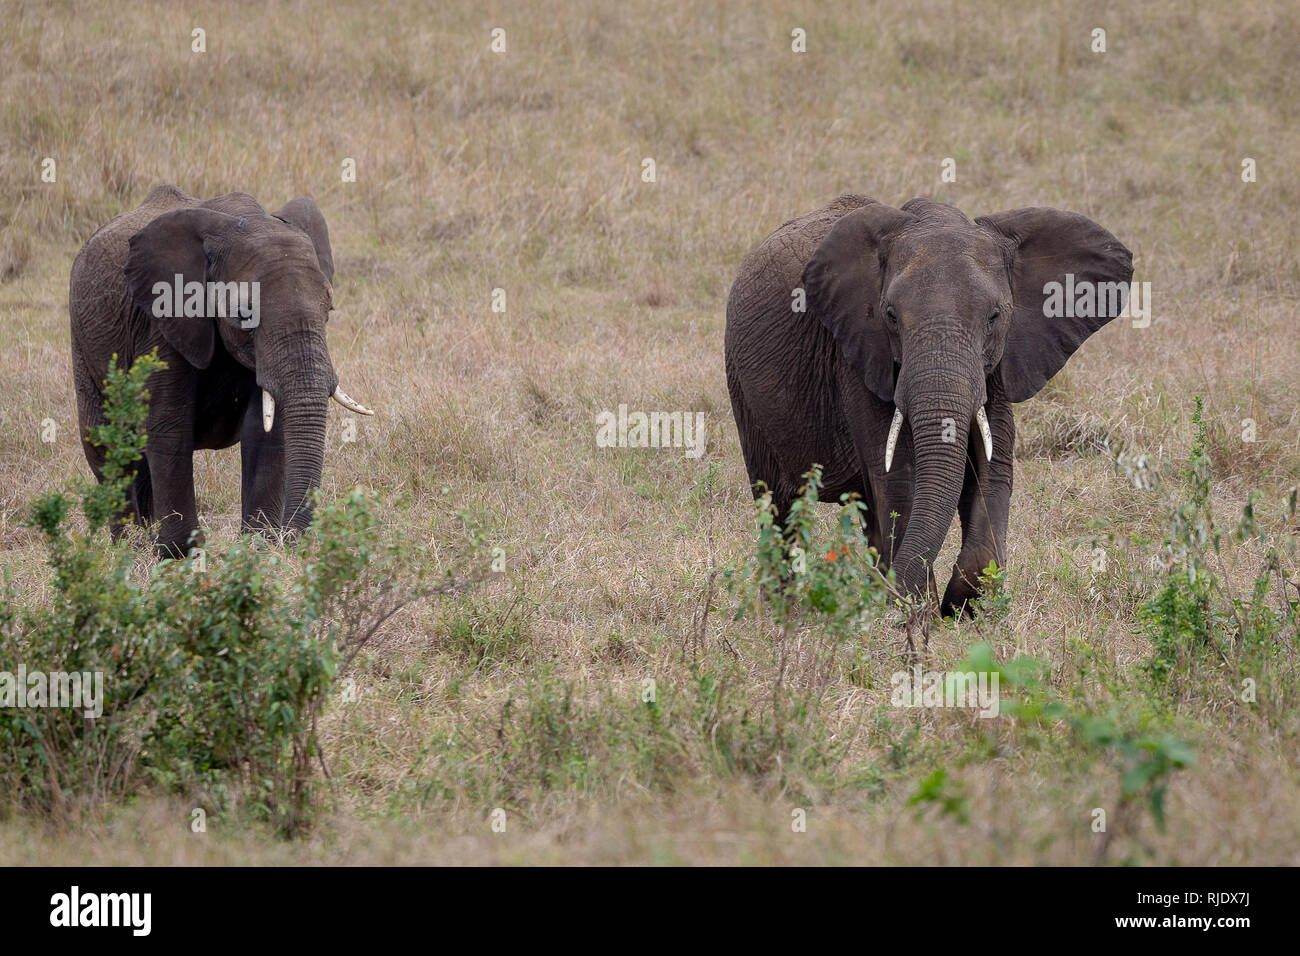 African elephant in Kenya, Africa Stock Photo